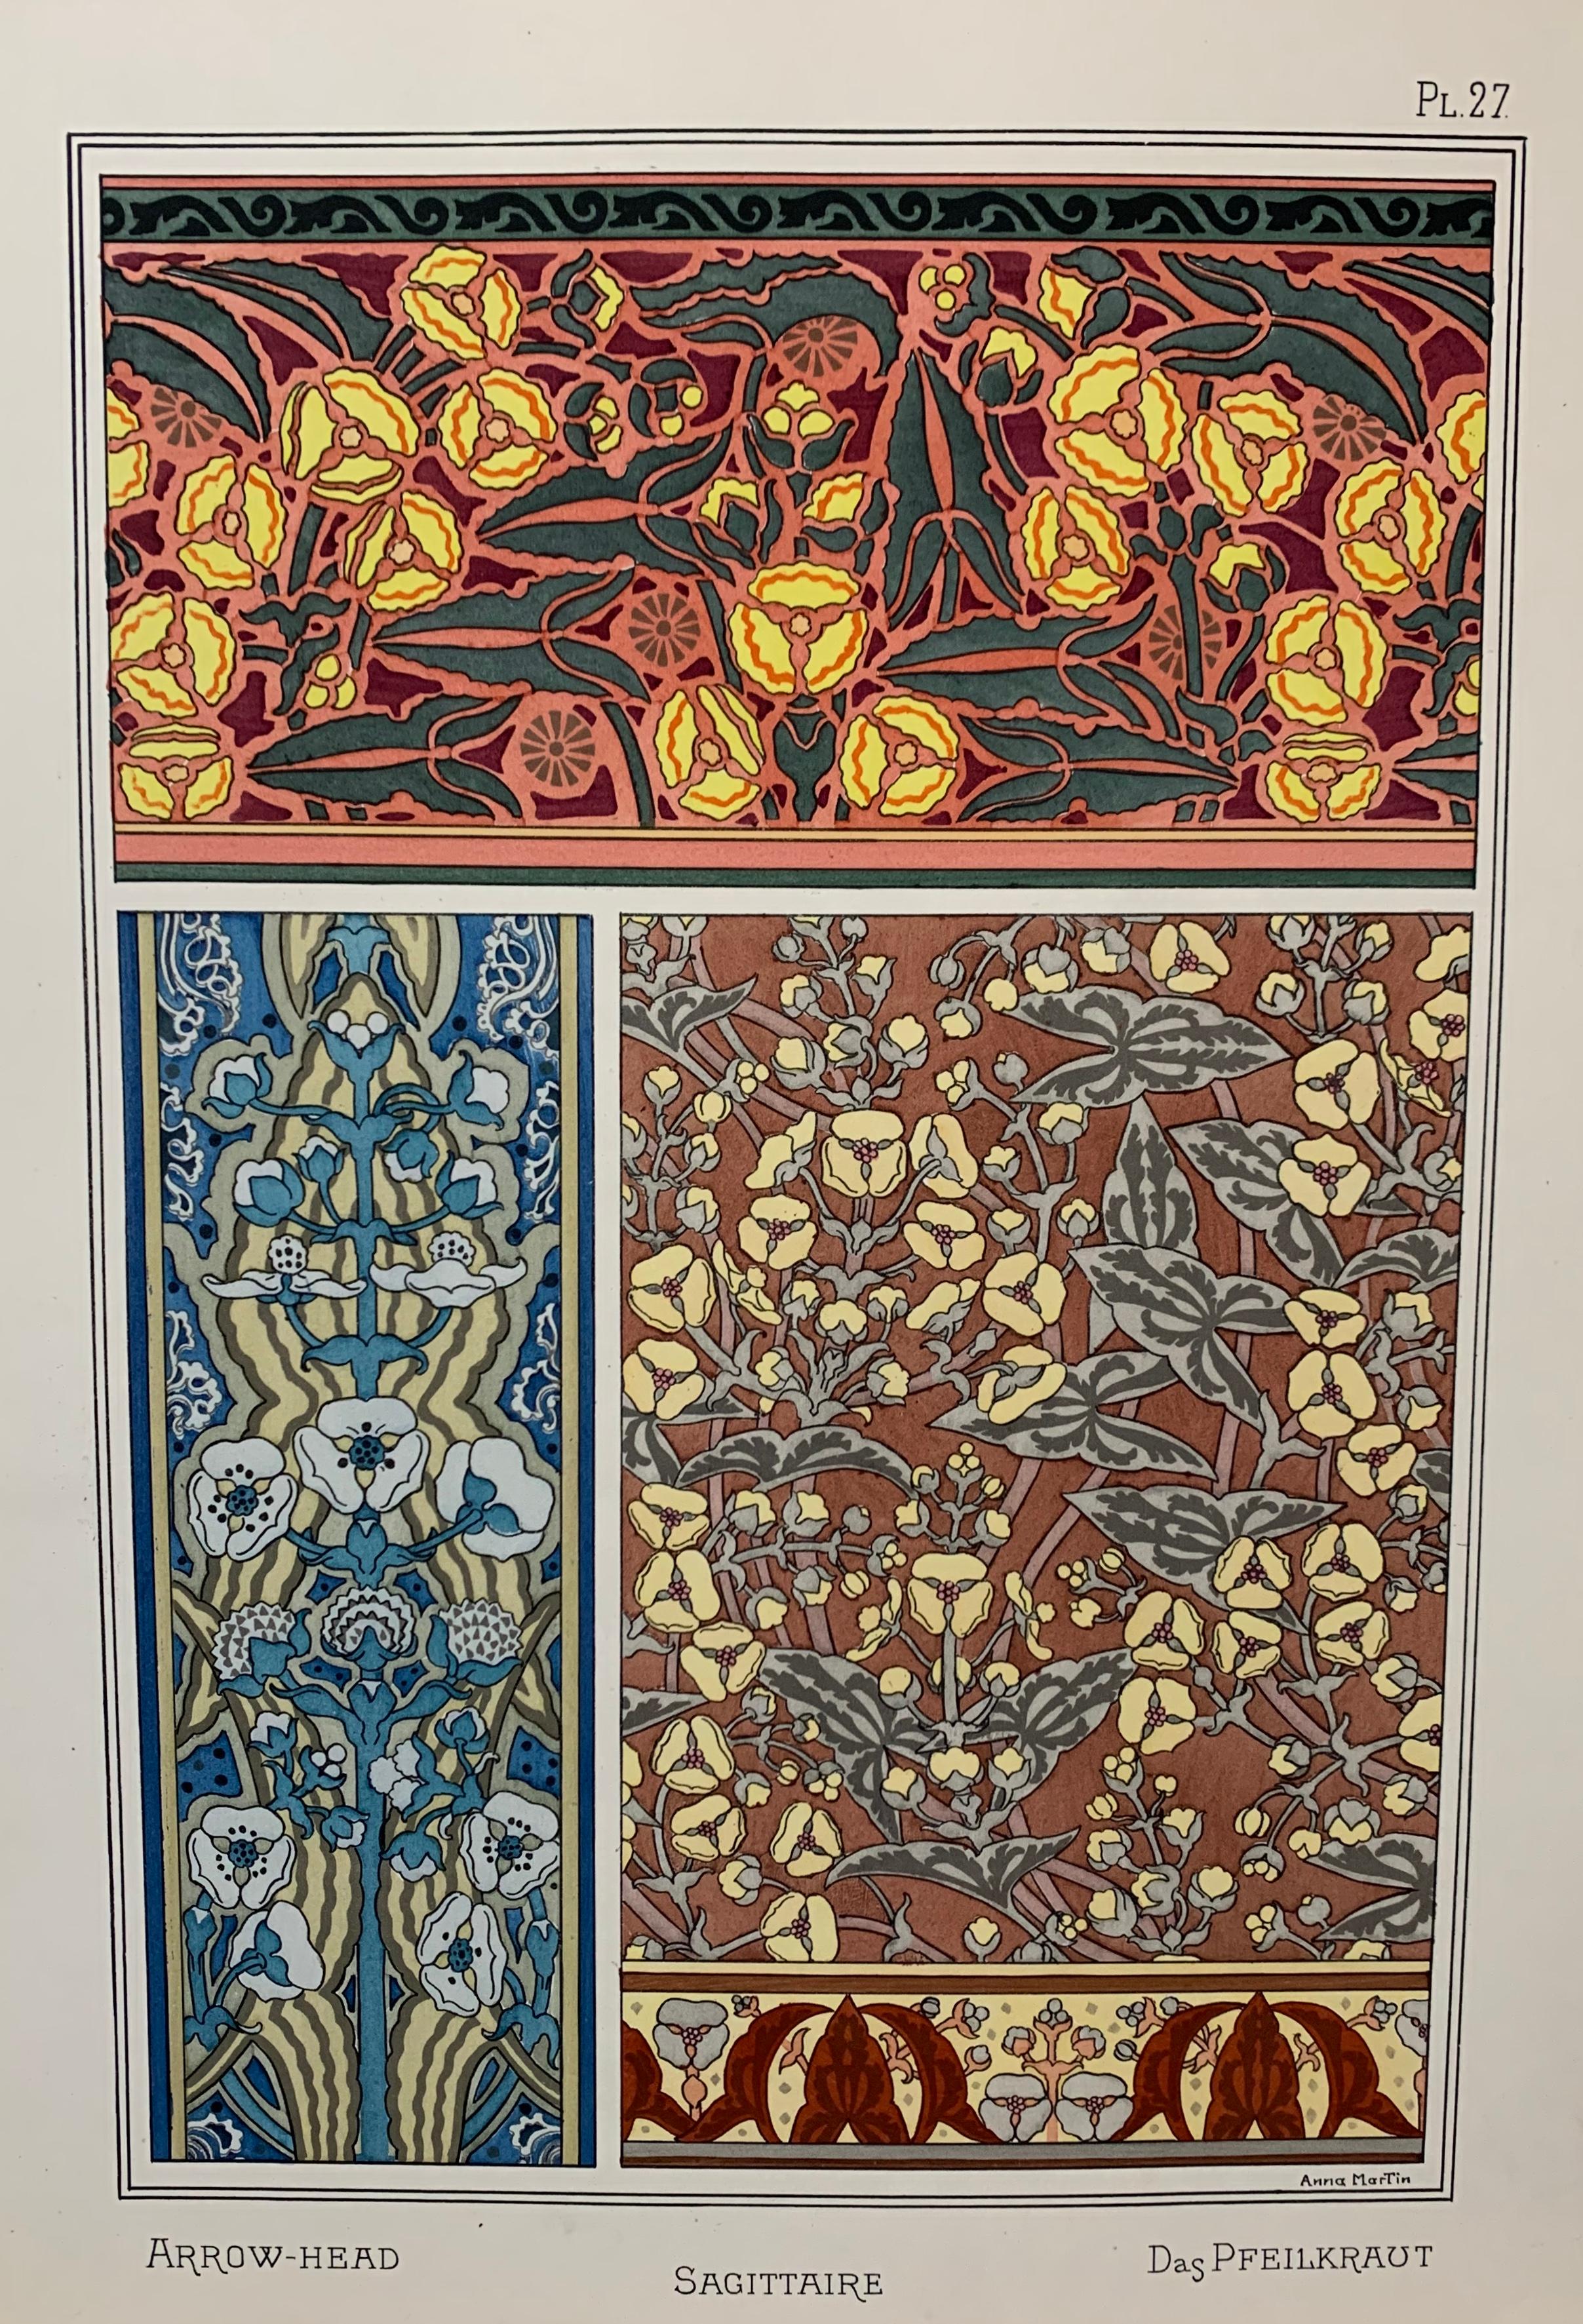 La plante et ses Applications Ornamentales Volumes 1 and 2 - Brown Figurative Print by Eugene Grasset